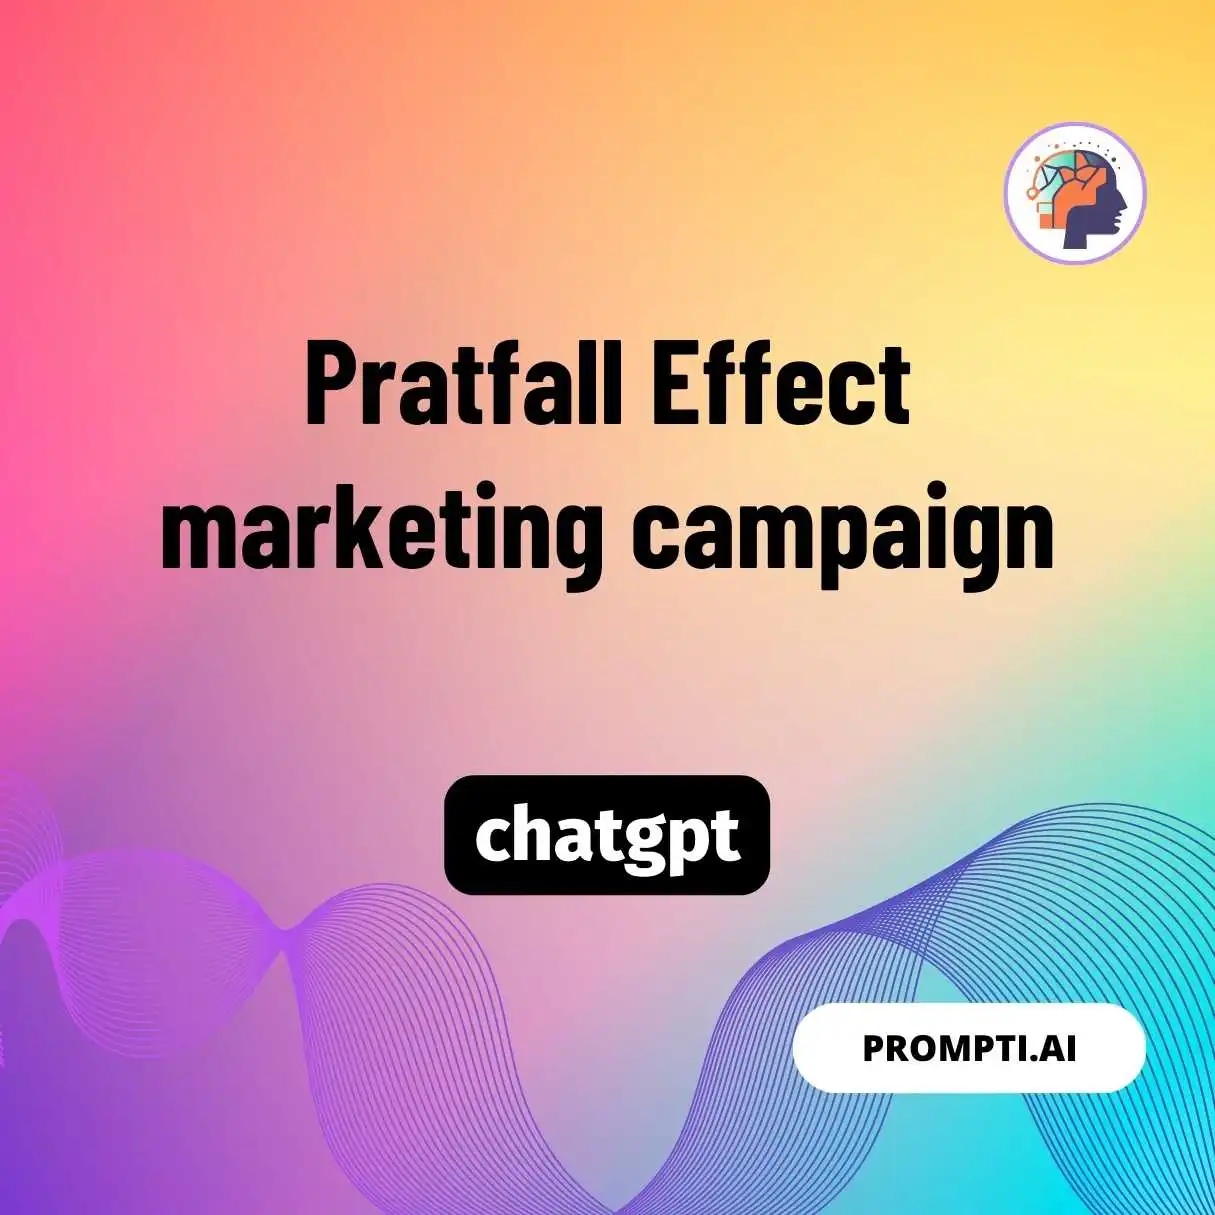 Pratfall Effect marketing campaign